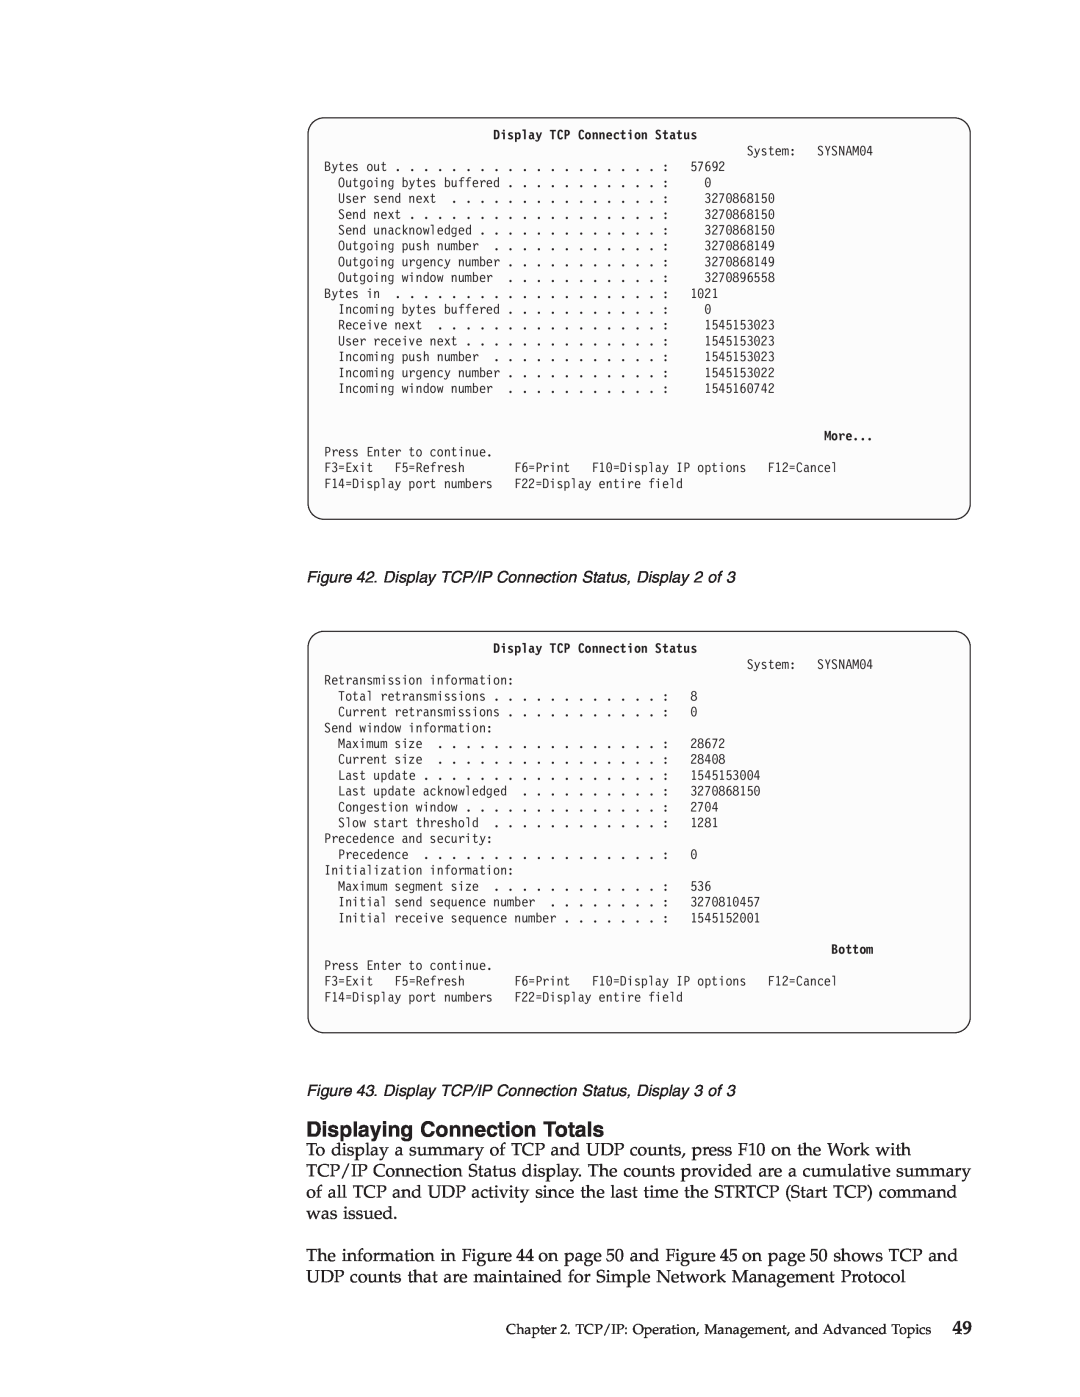 IBM SC41-5420-04 manual Displaying Connection Totals 